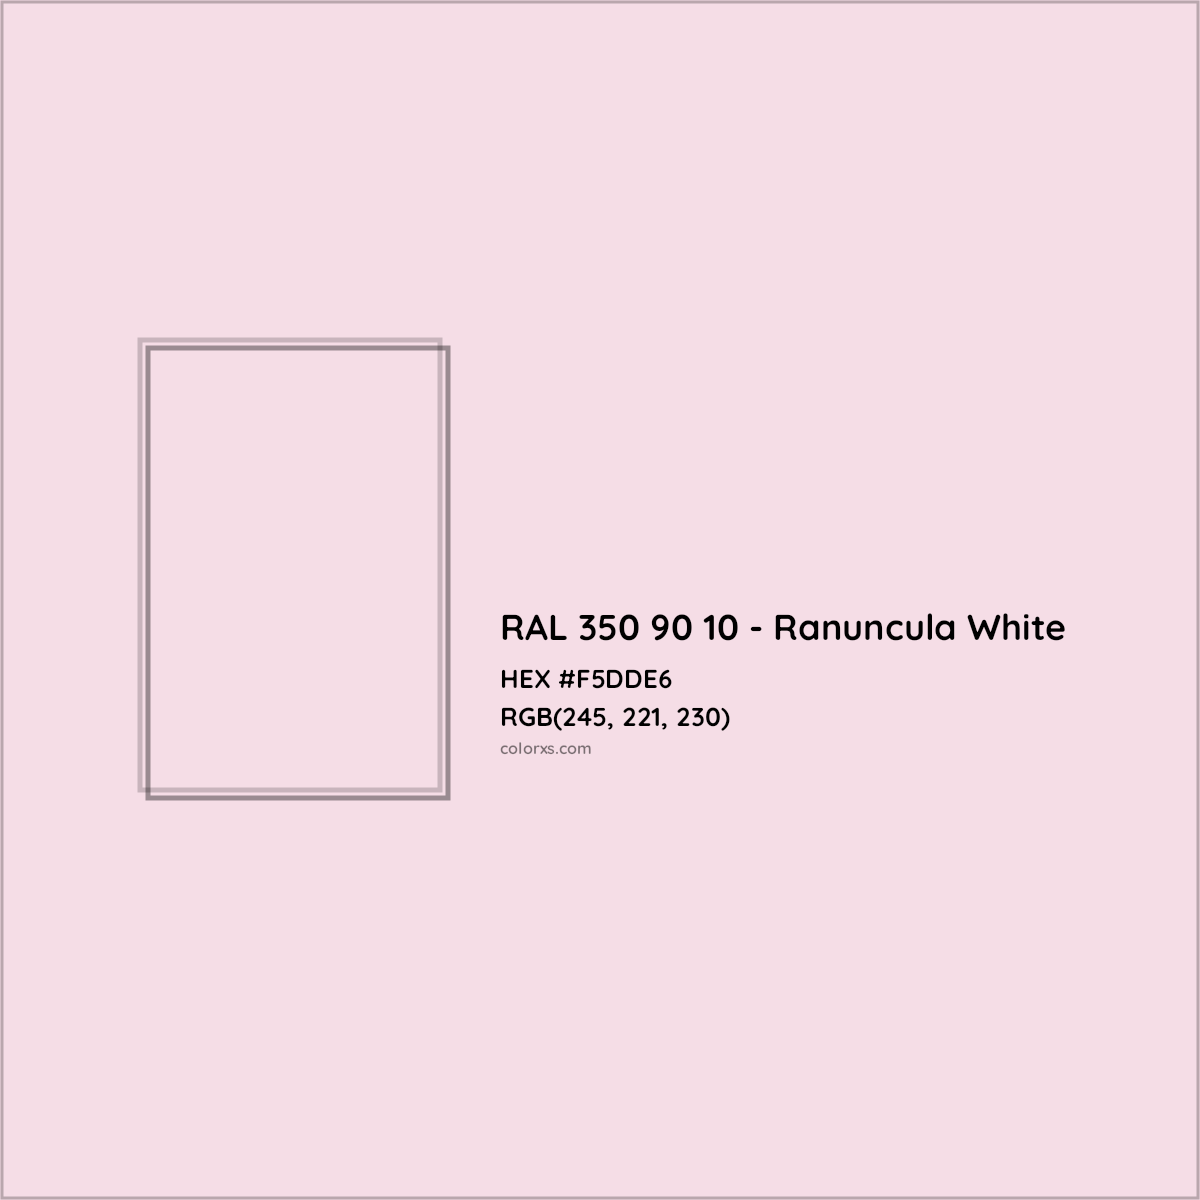 HEX #F5DDE6 RAL 350 90 10 - Ranuncula White CMS RAL Design - Color Code